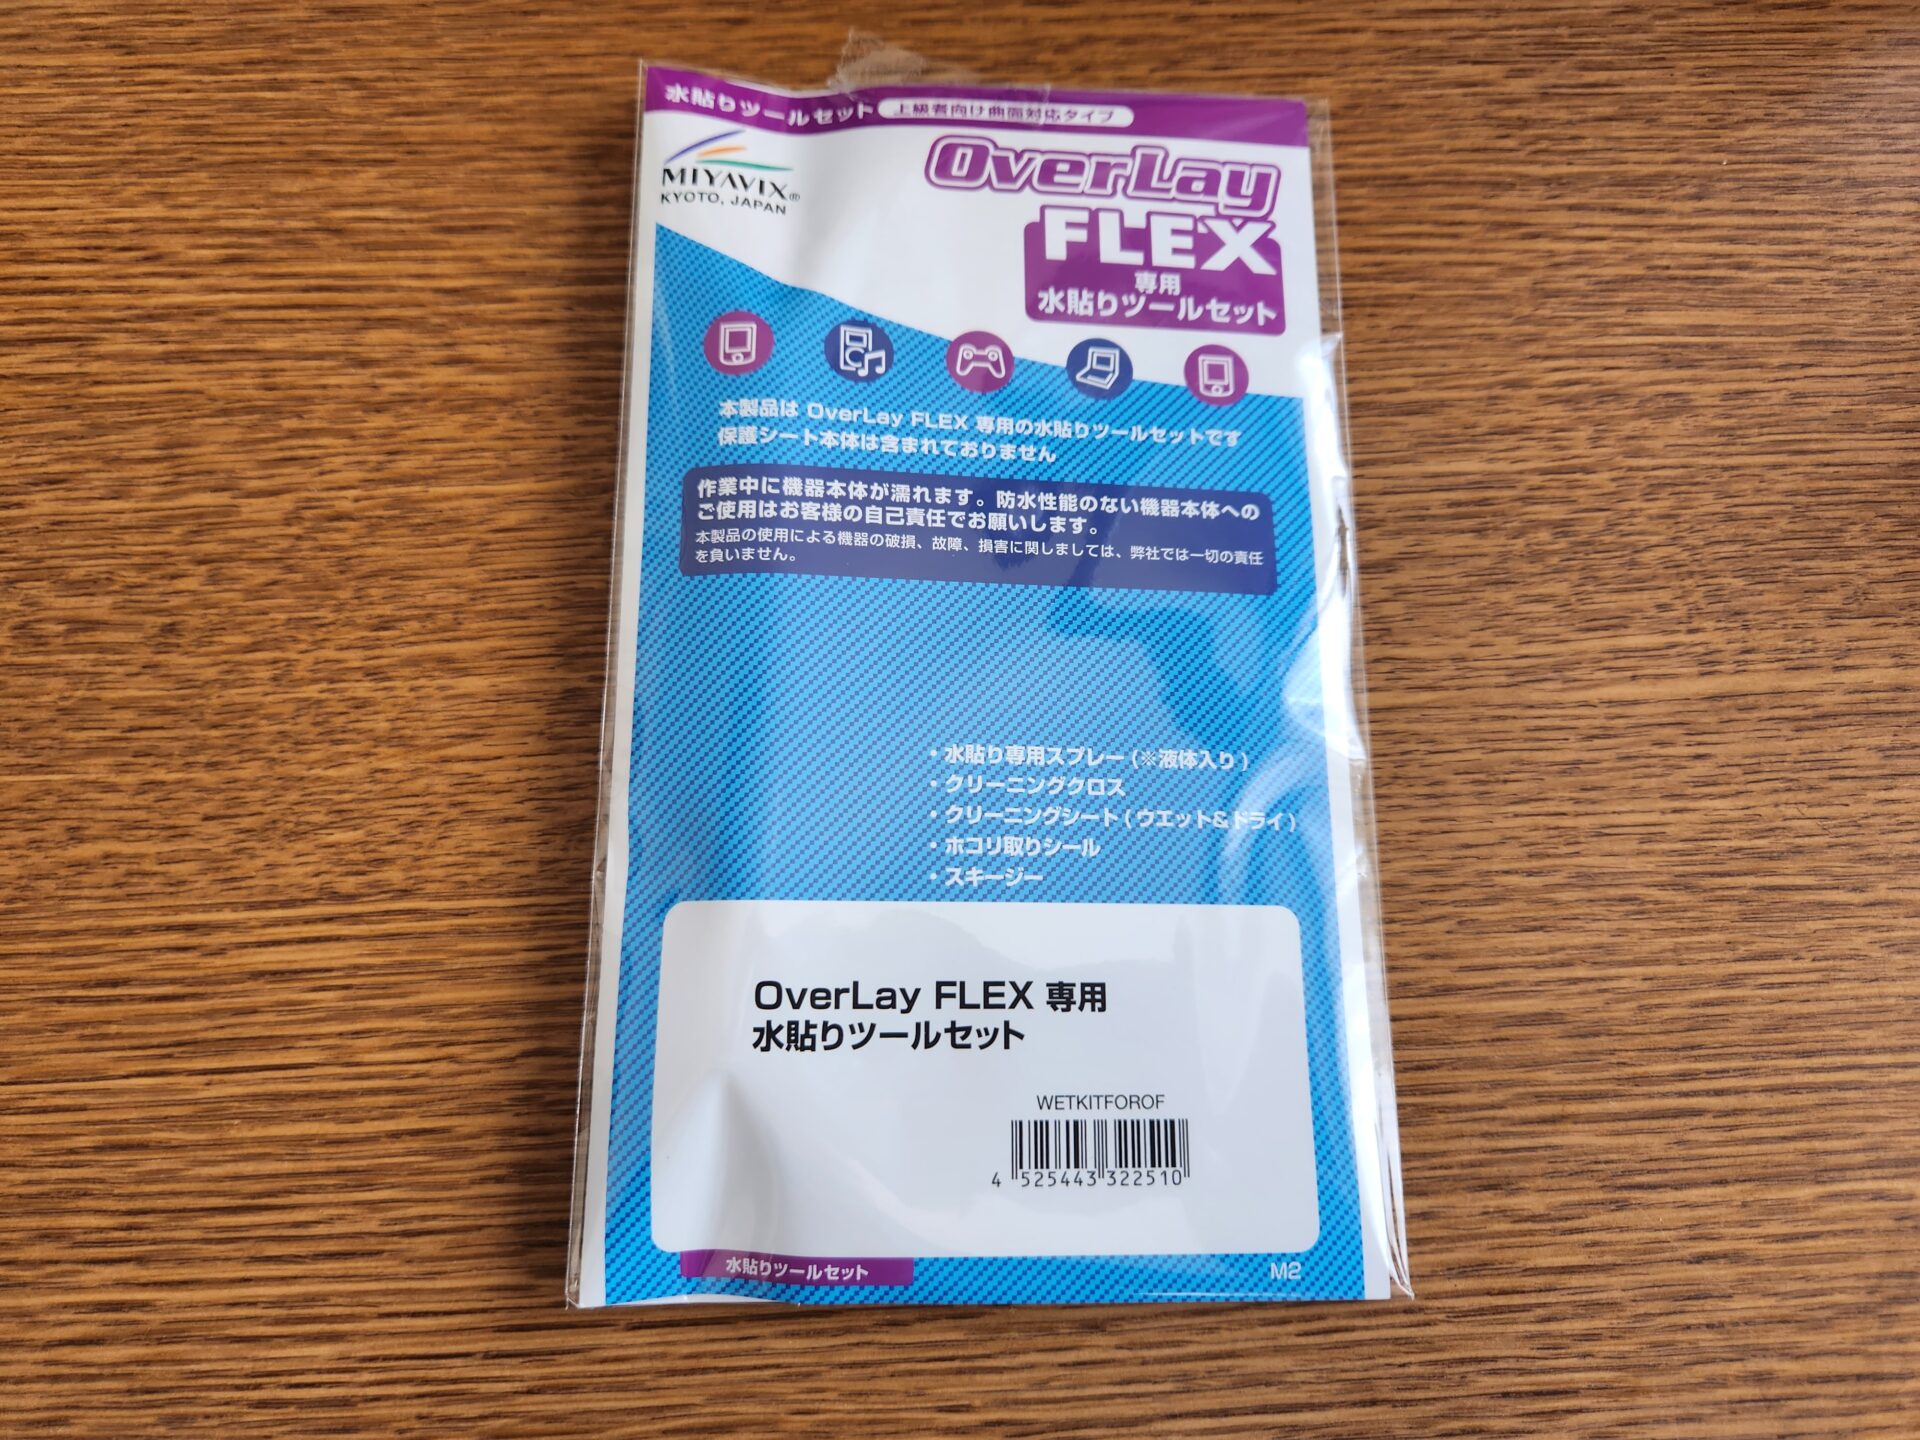 miyavix-overlay-flex-water-paste-kit-package-front